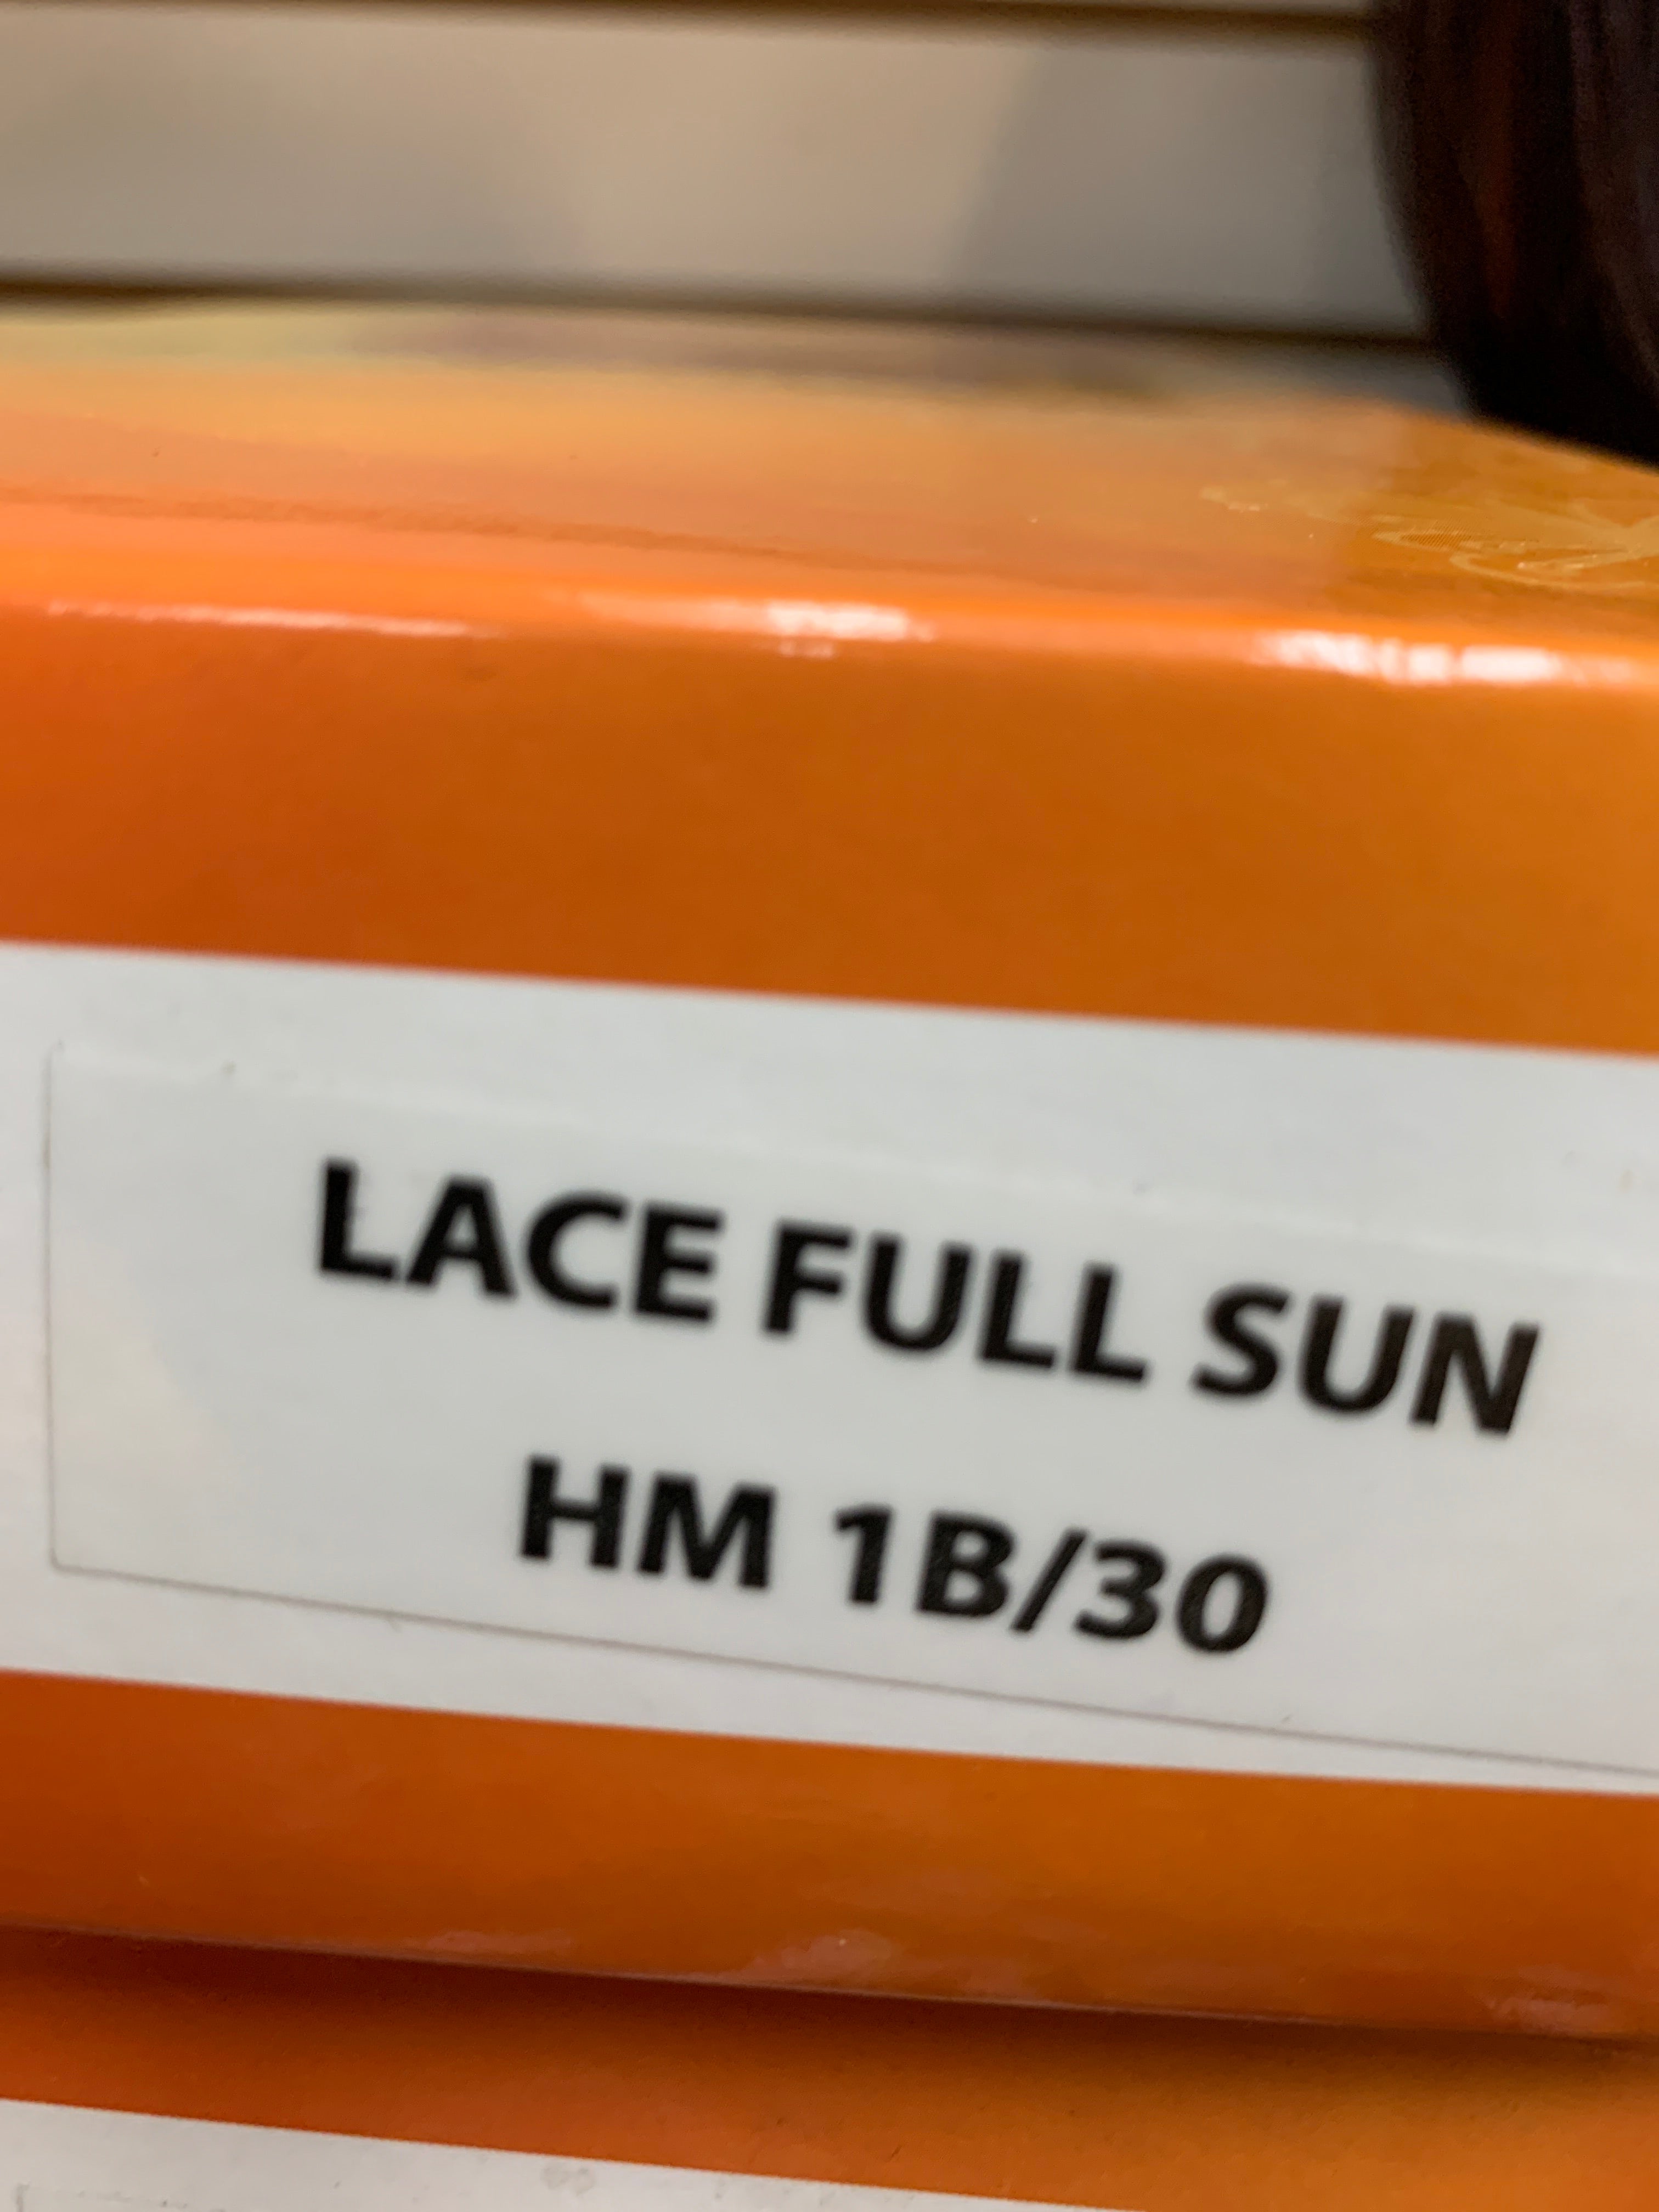 It’s a wig lace full sun